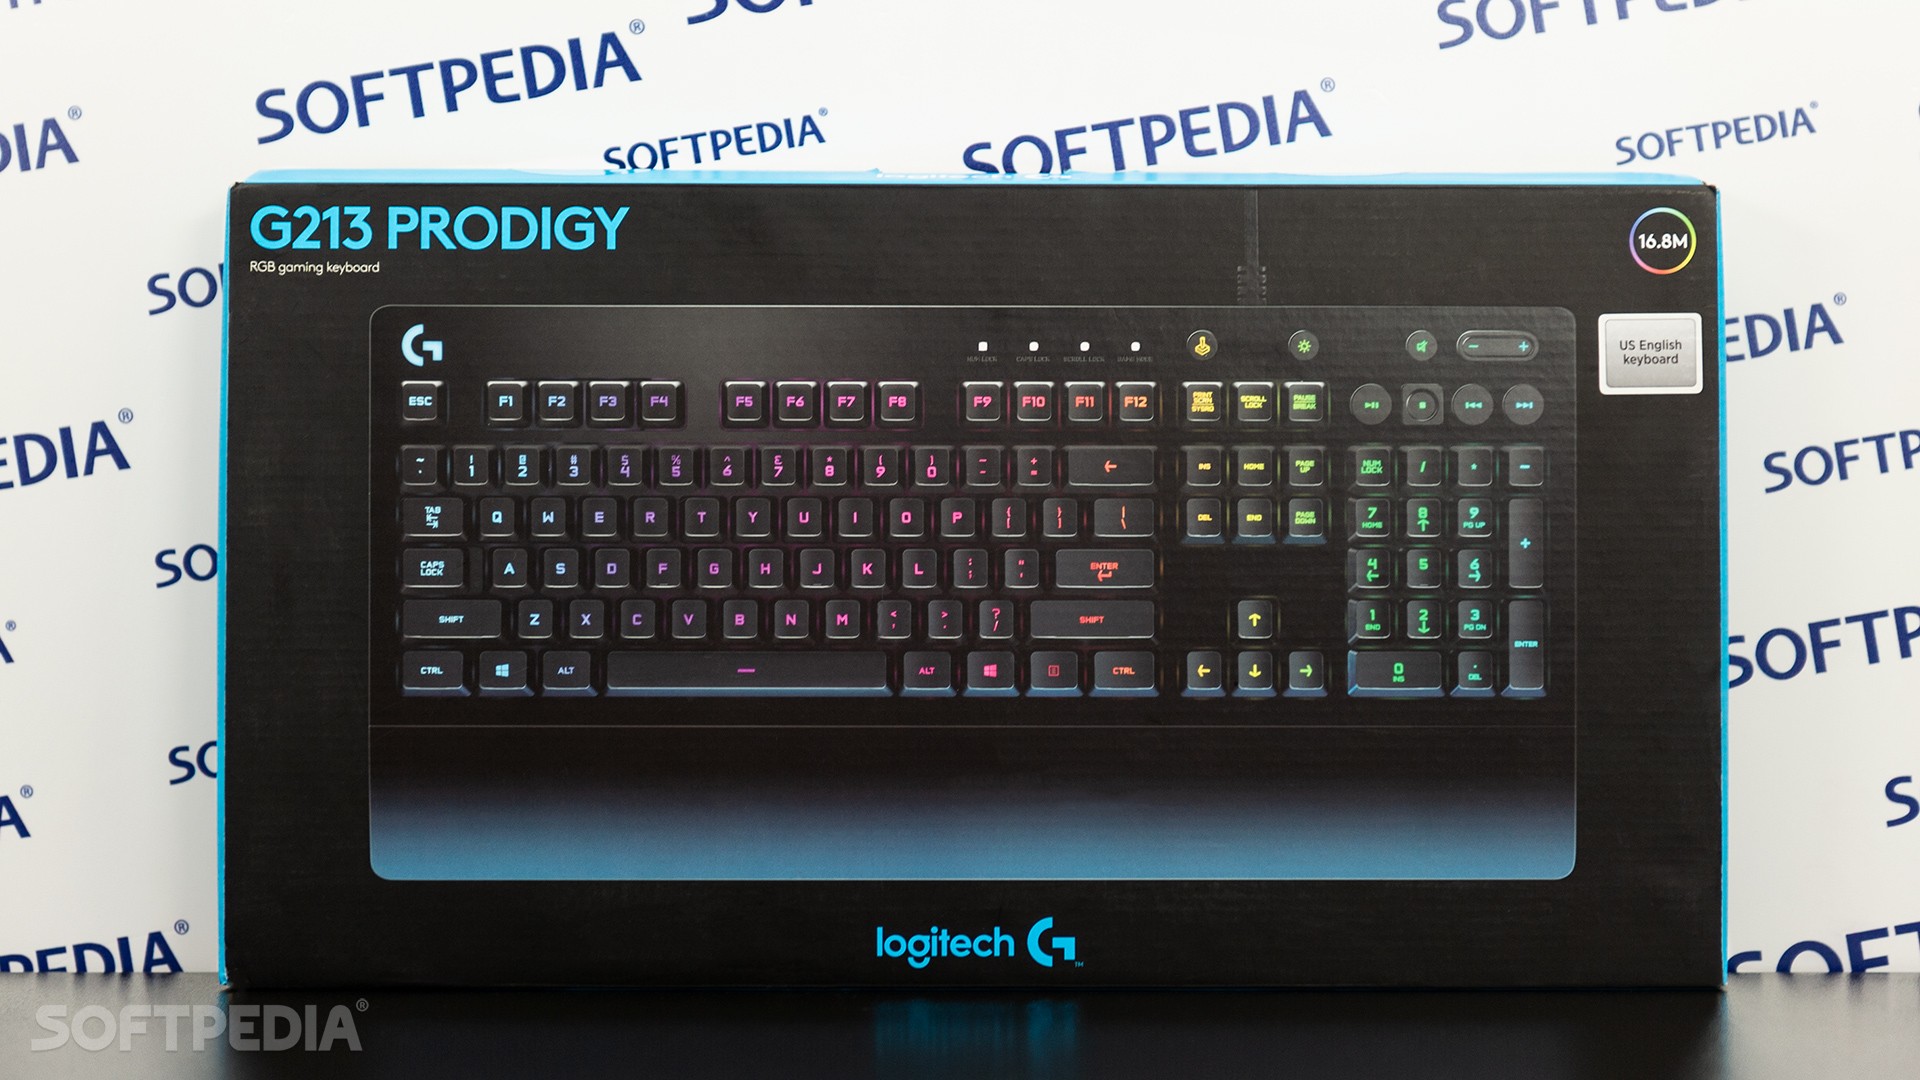 Logitech G213 Prodigy Gaming Keyboard Instruction Manual